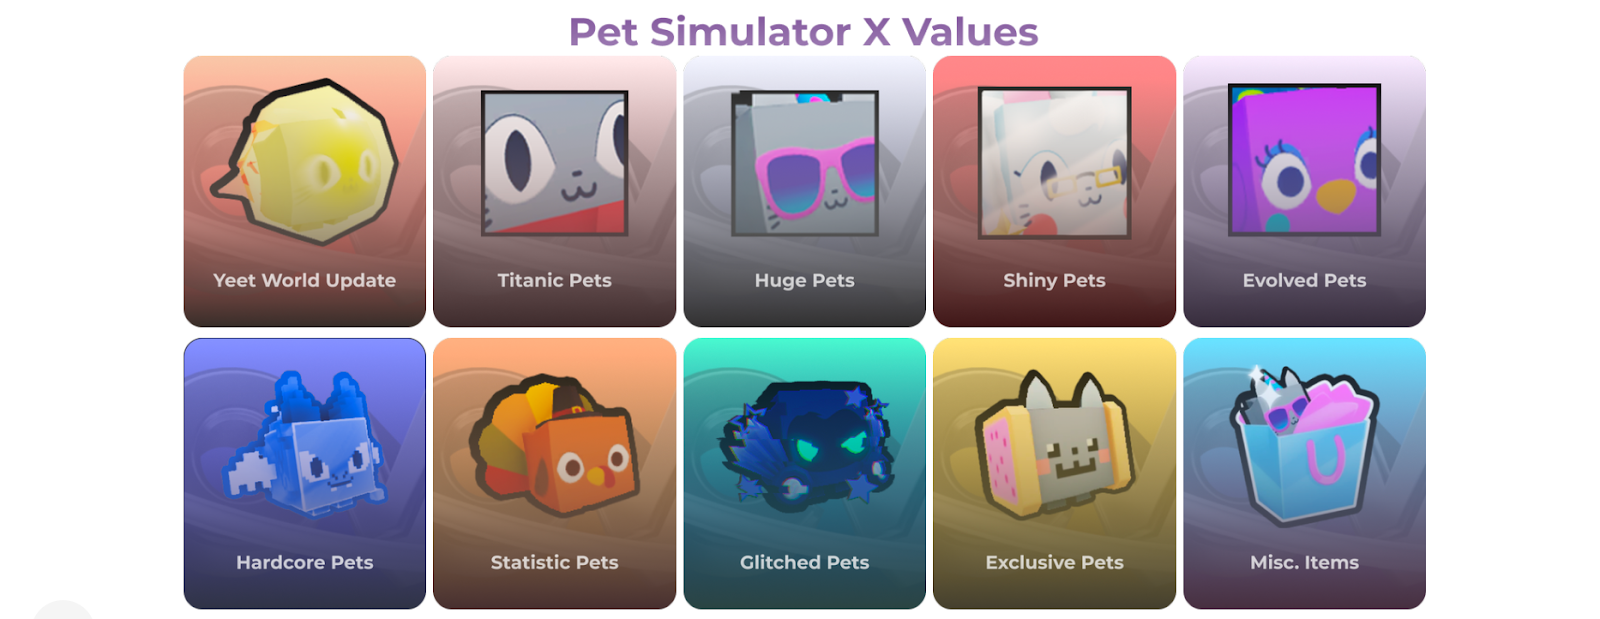 Cosmic Values Pet Sim X